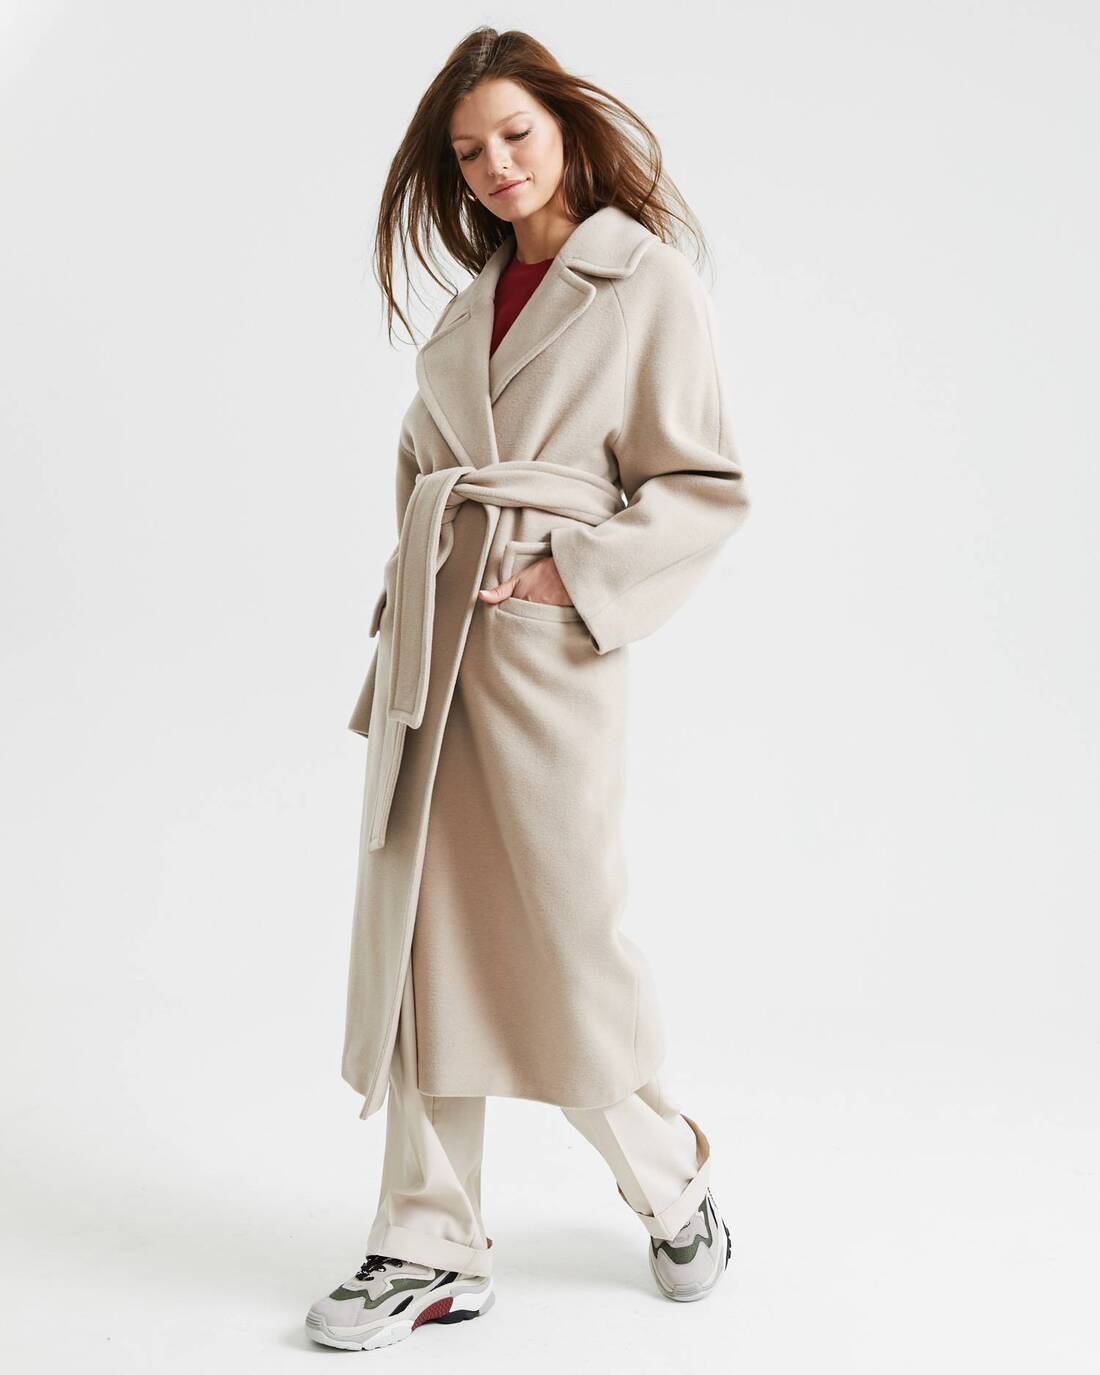 Wool robe coat